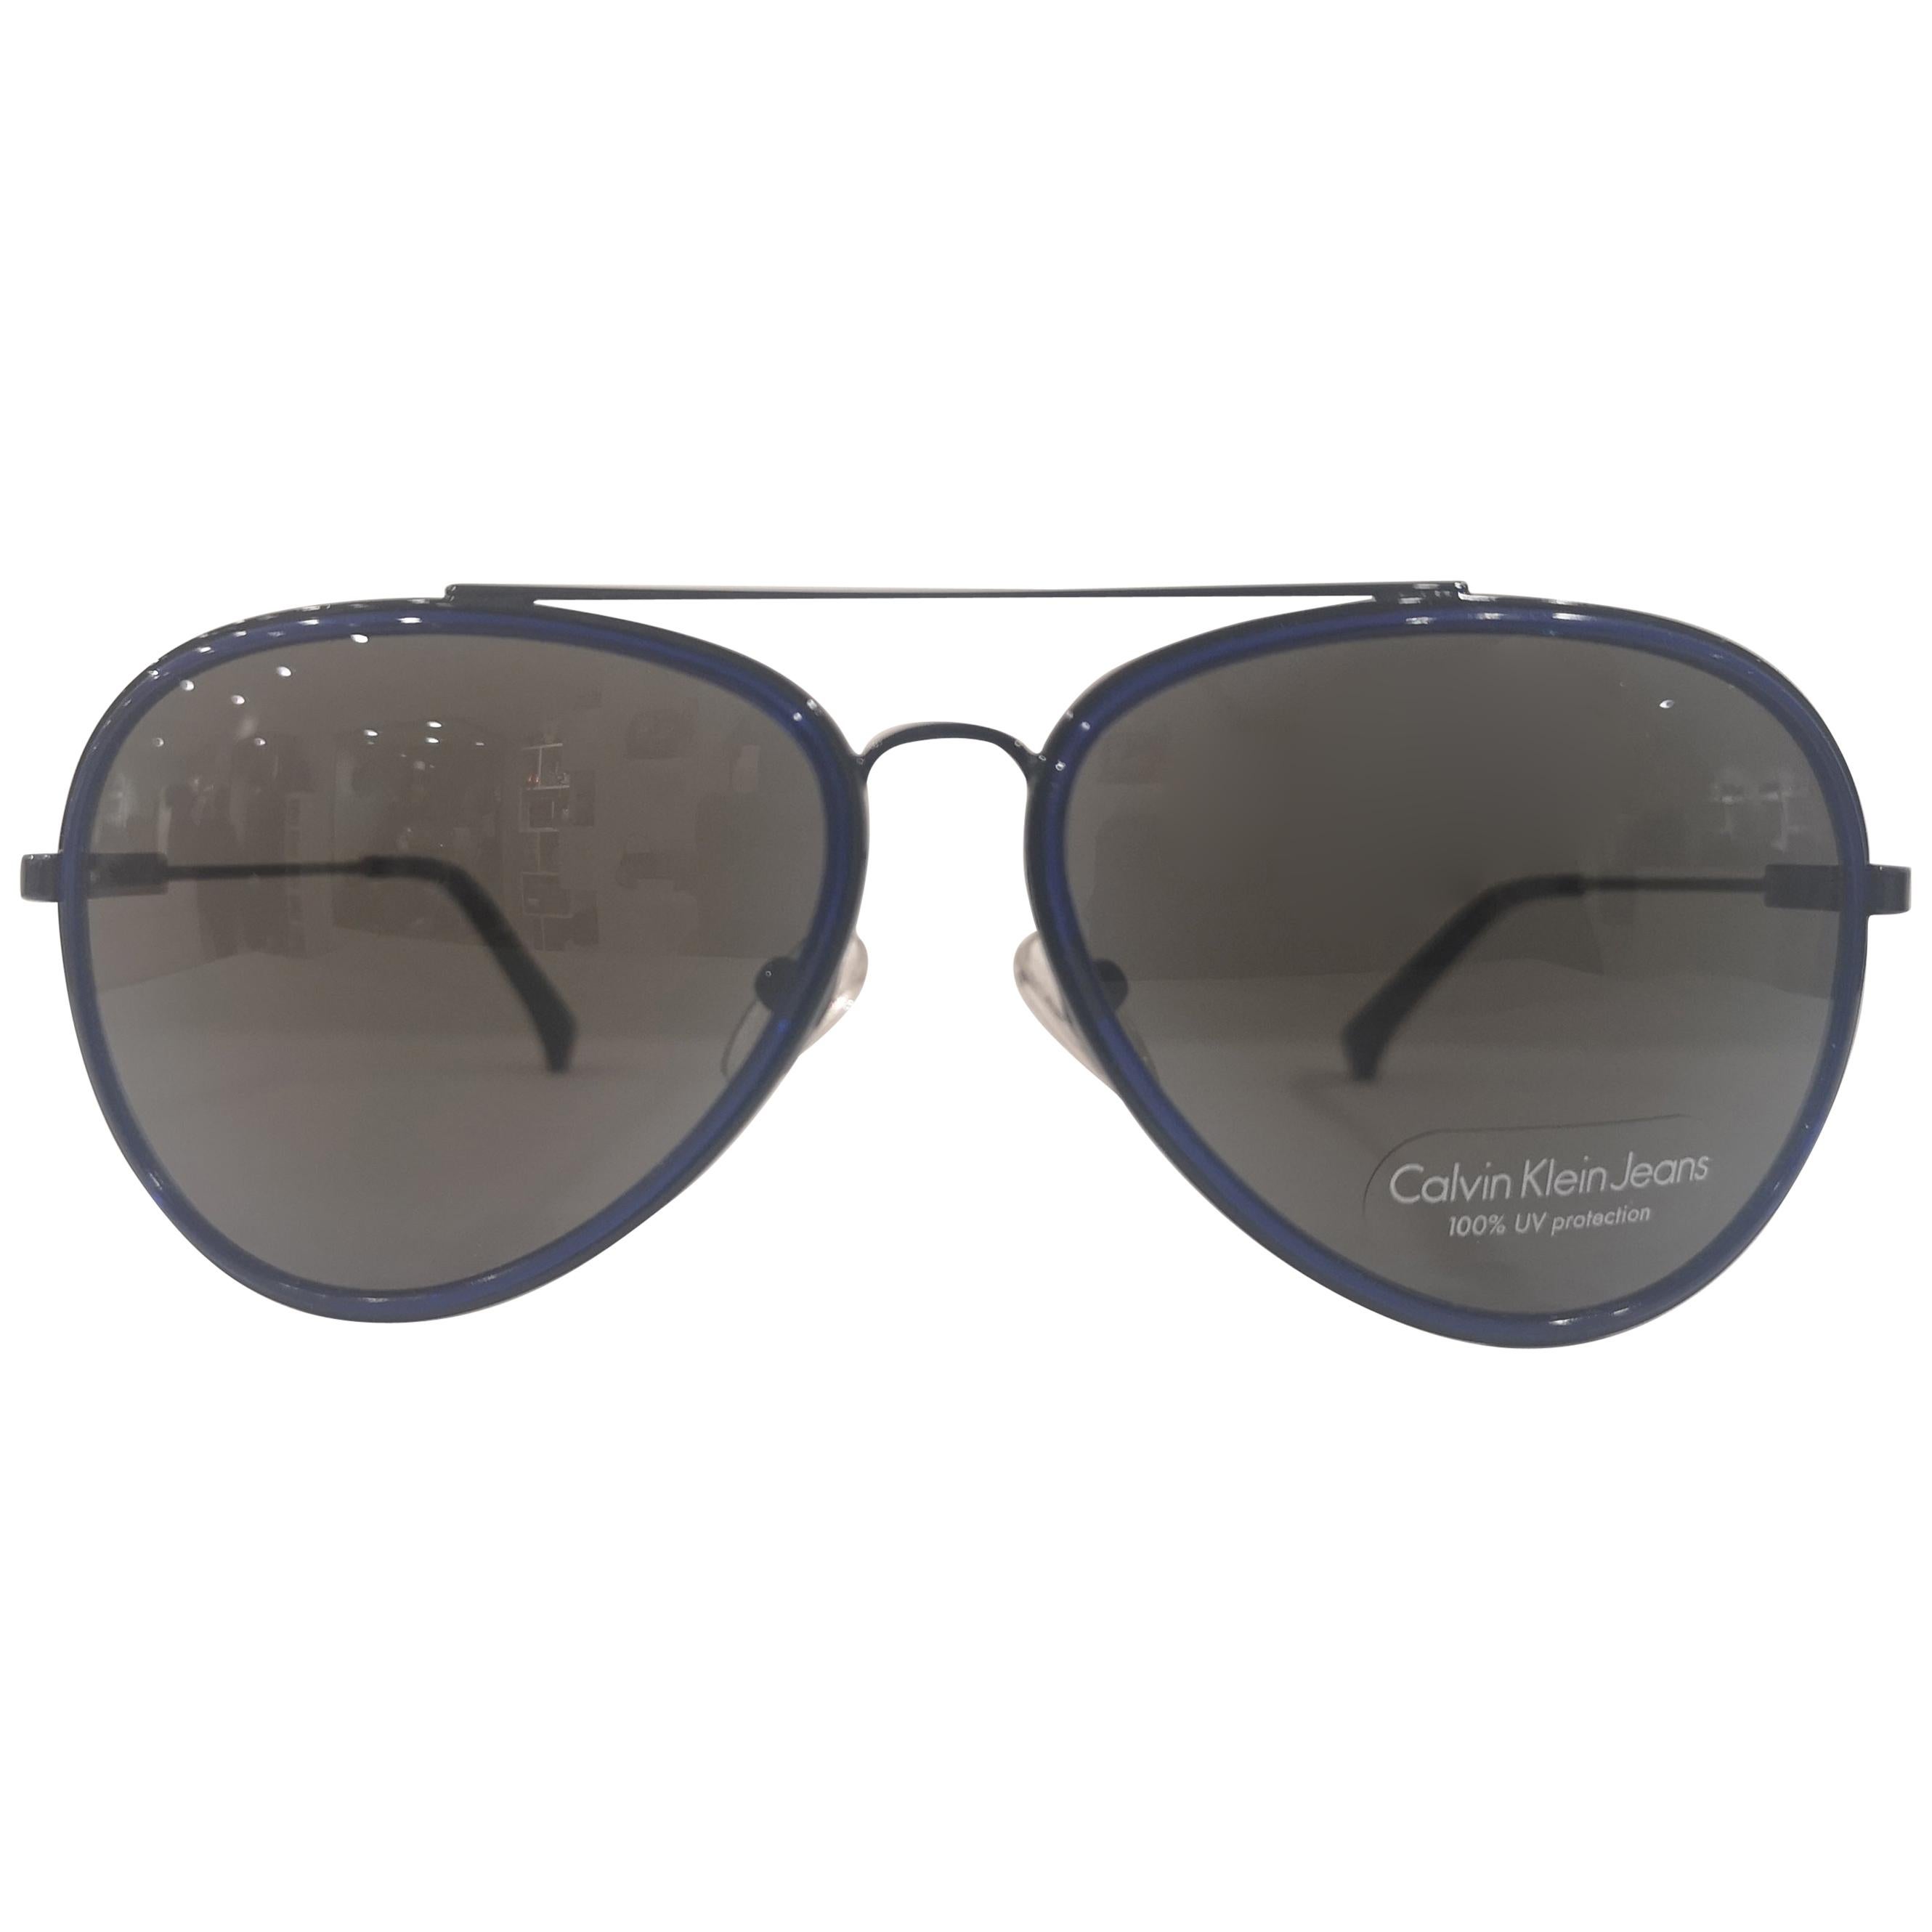 Calvin Klein sunglasses NWOT